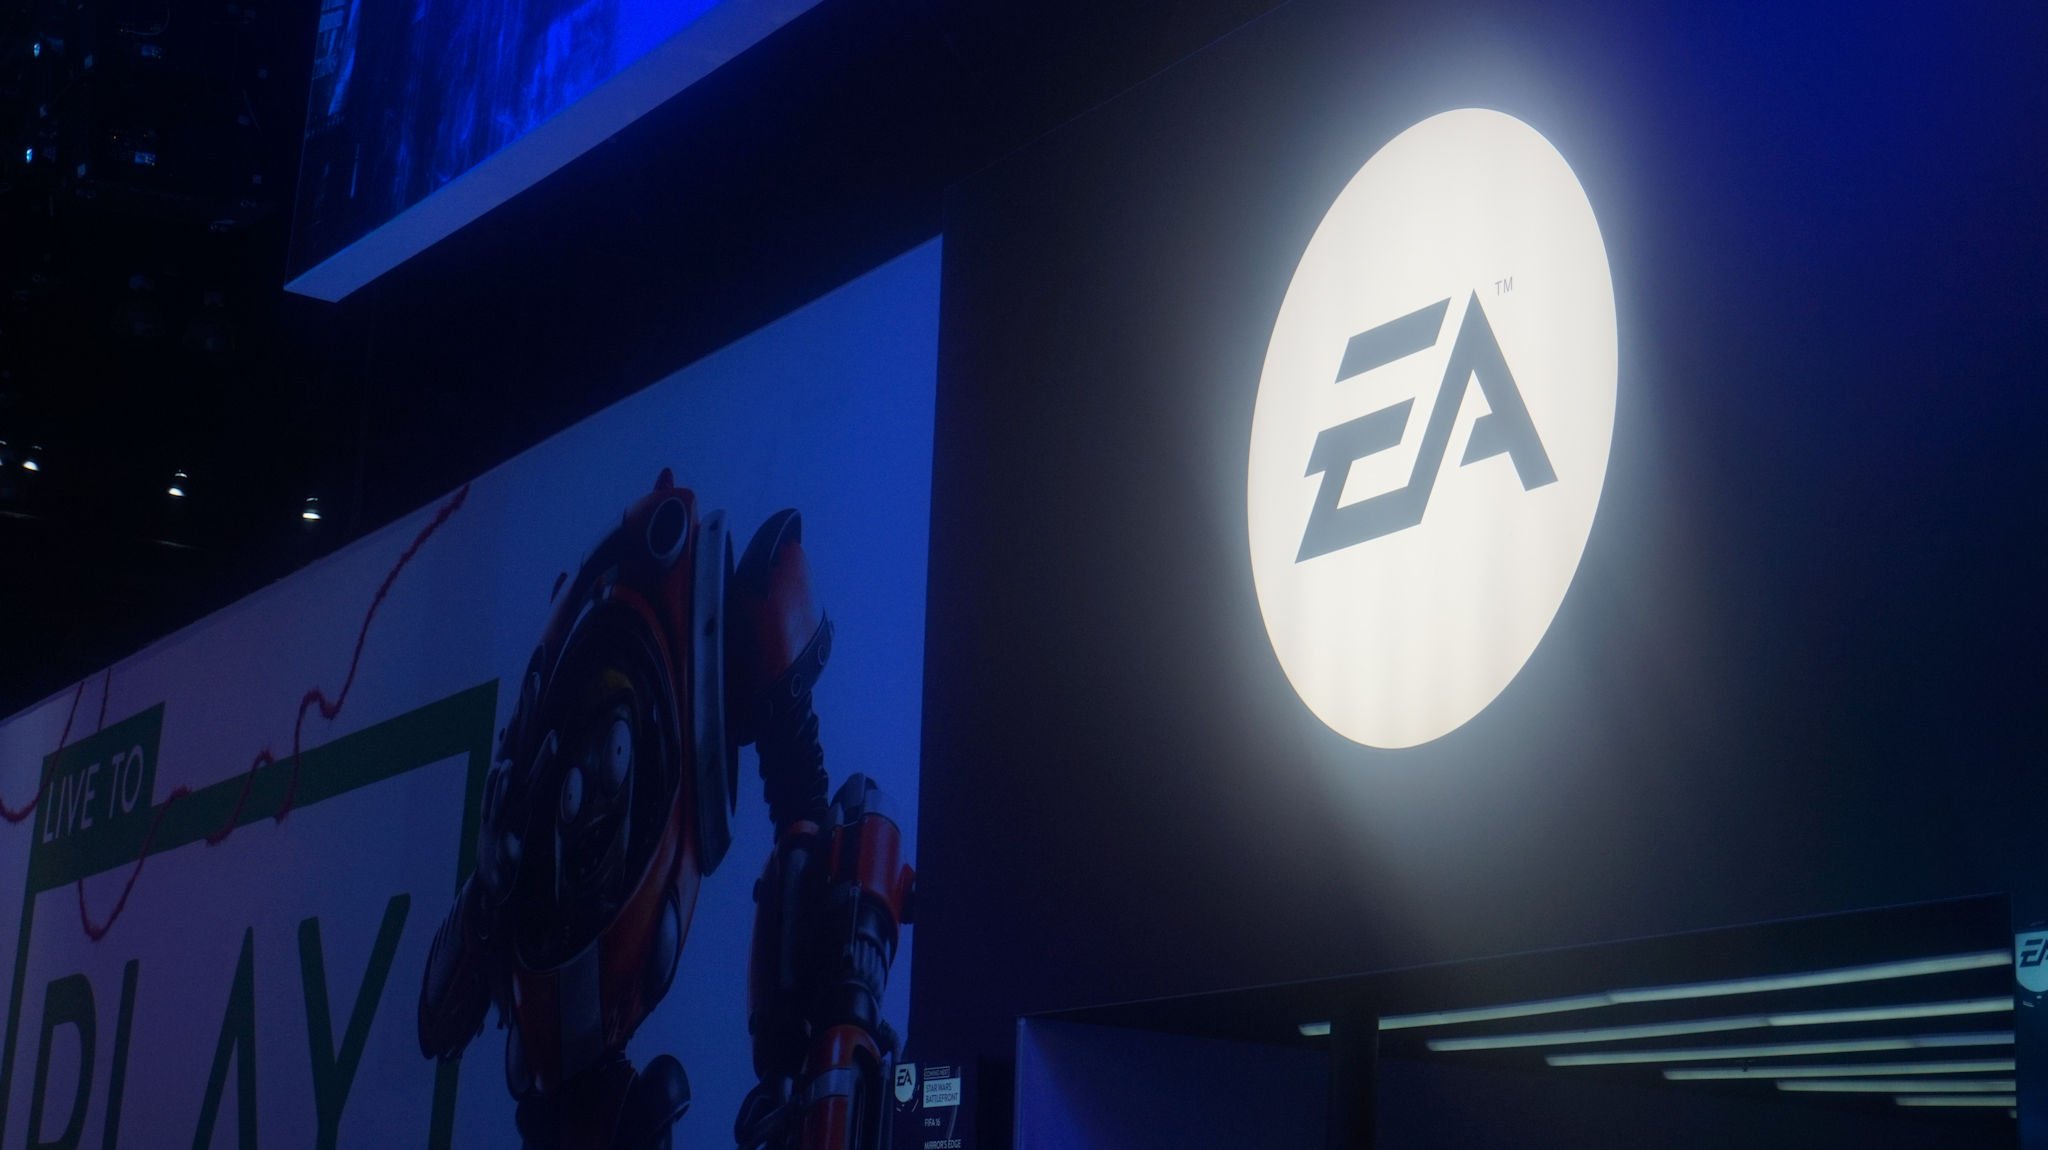 Electronic-Arts-E3-2015-logo.jpg